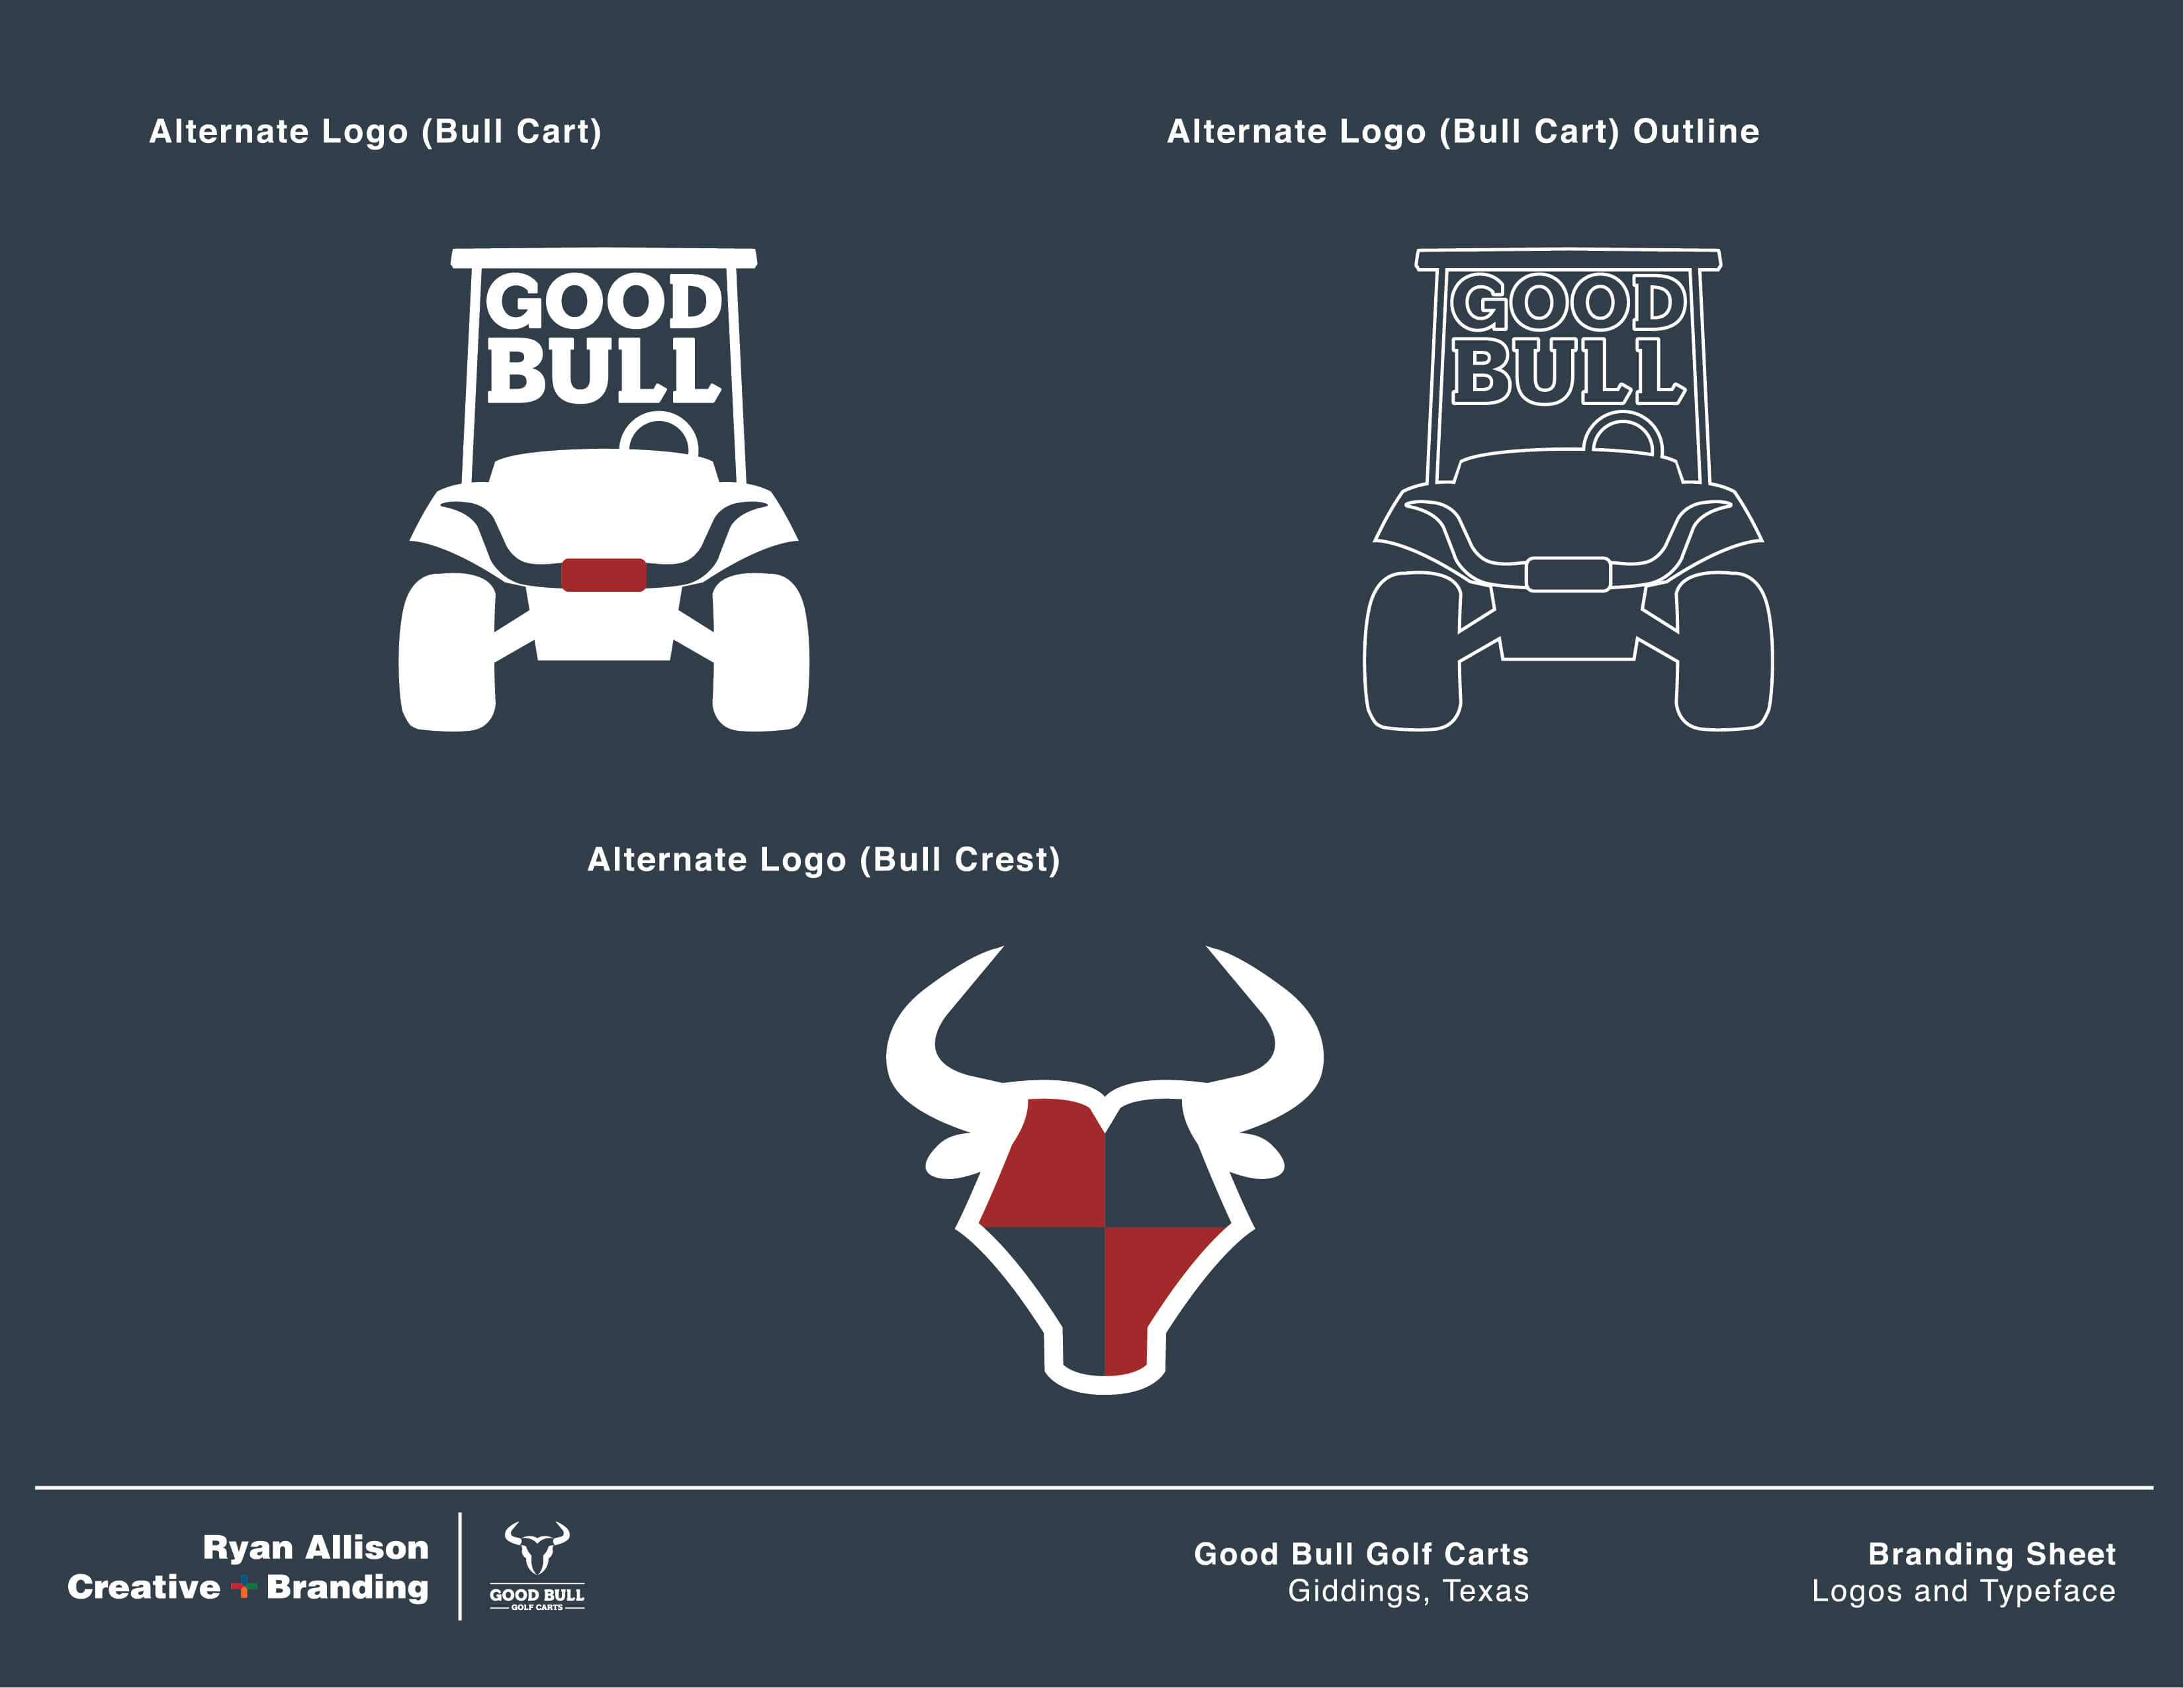 Good Bull Golf Carts - Branding Sheet Page 4 - Ryan Allison Creative + Branding